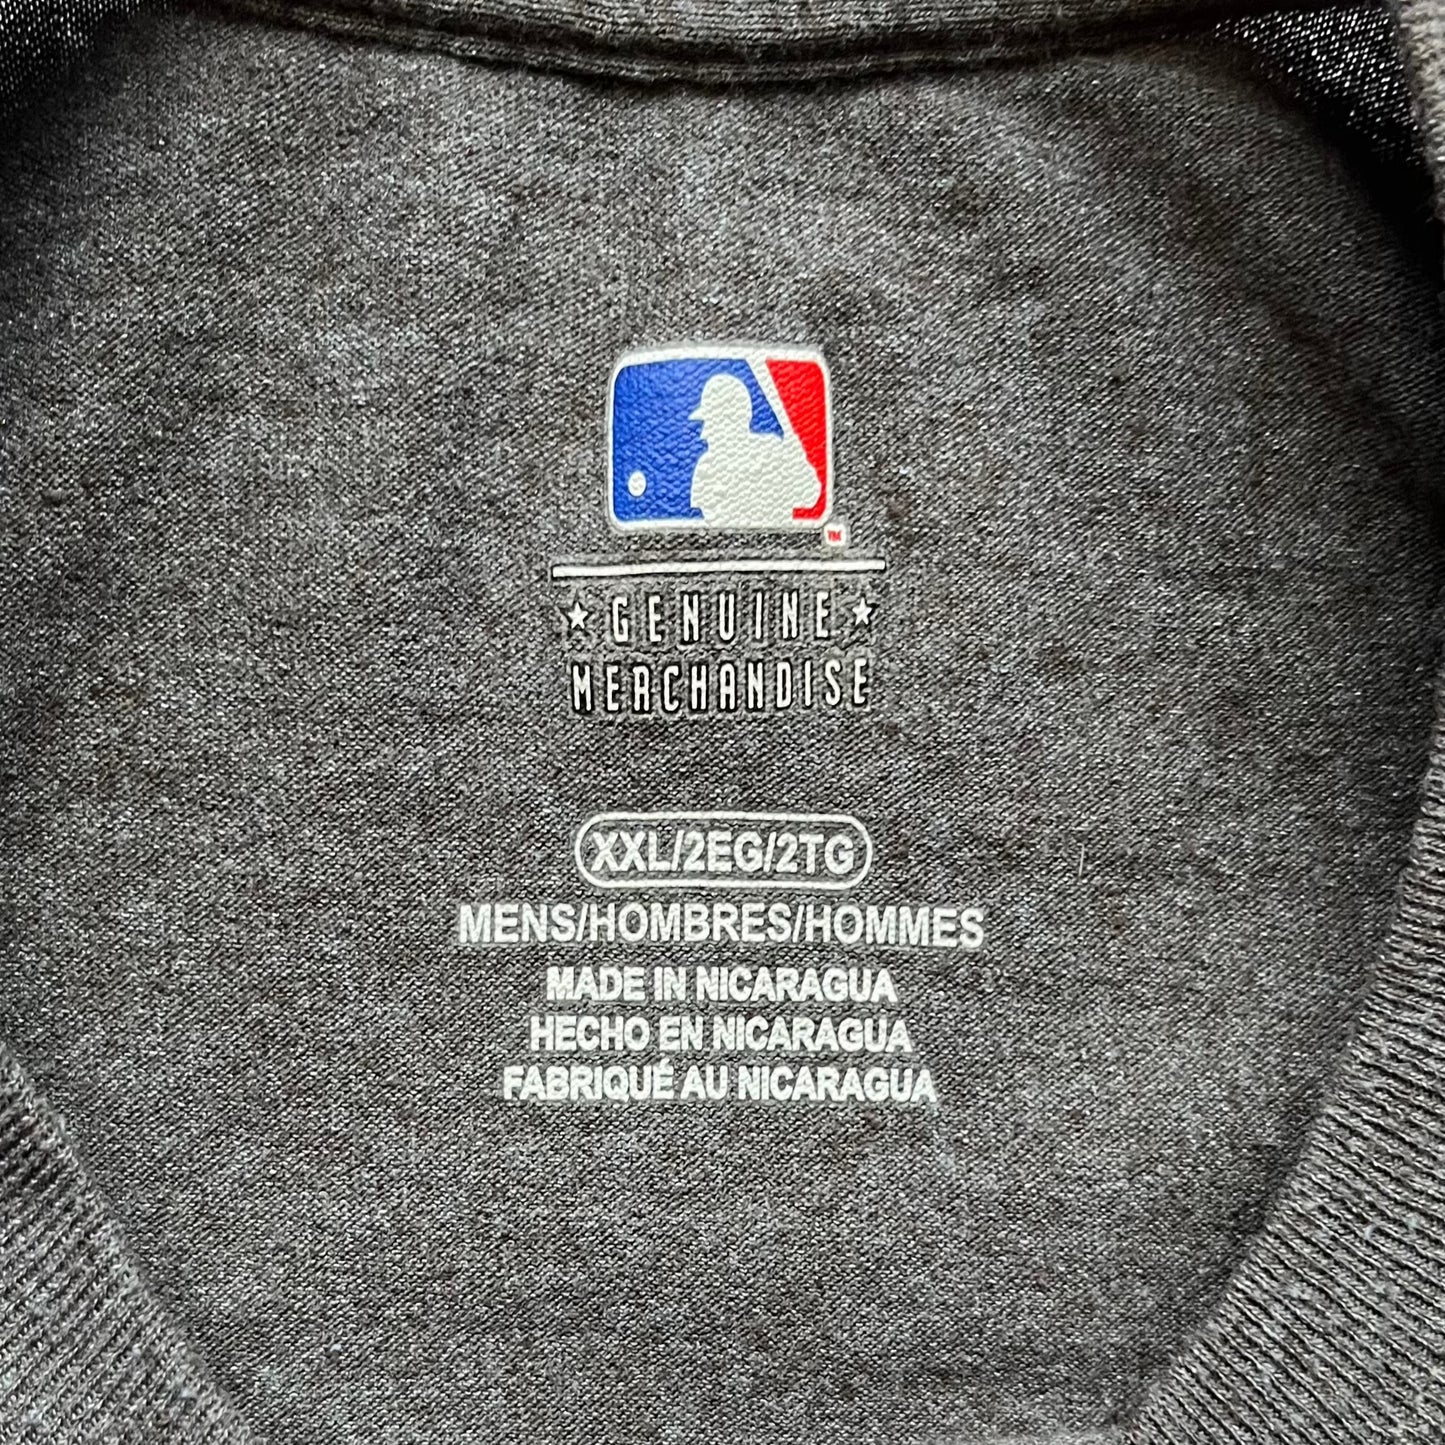 Houston Astros - MLB - MLB Genuine Merchandise Tee (XX-Large)